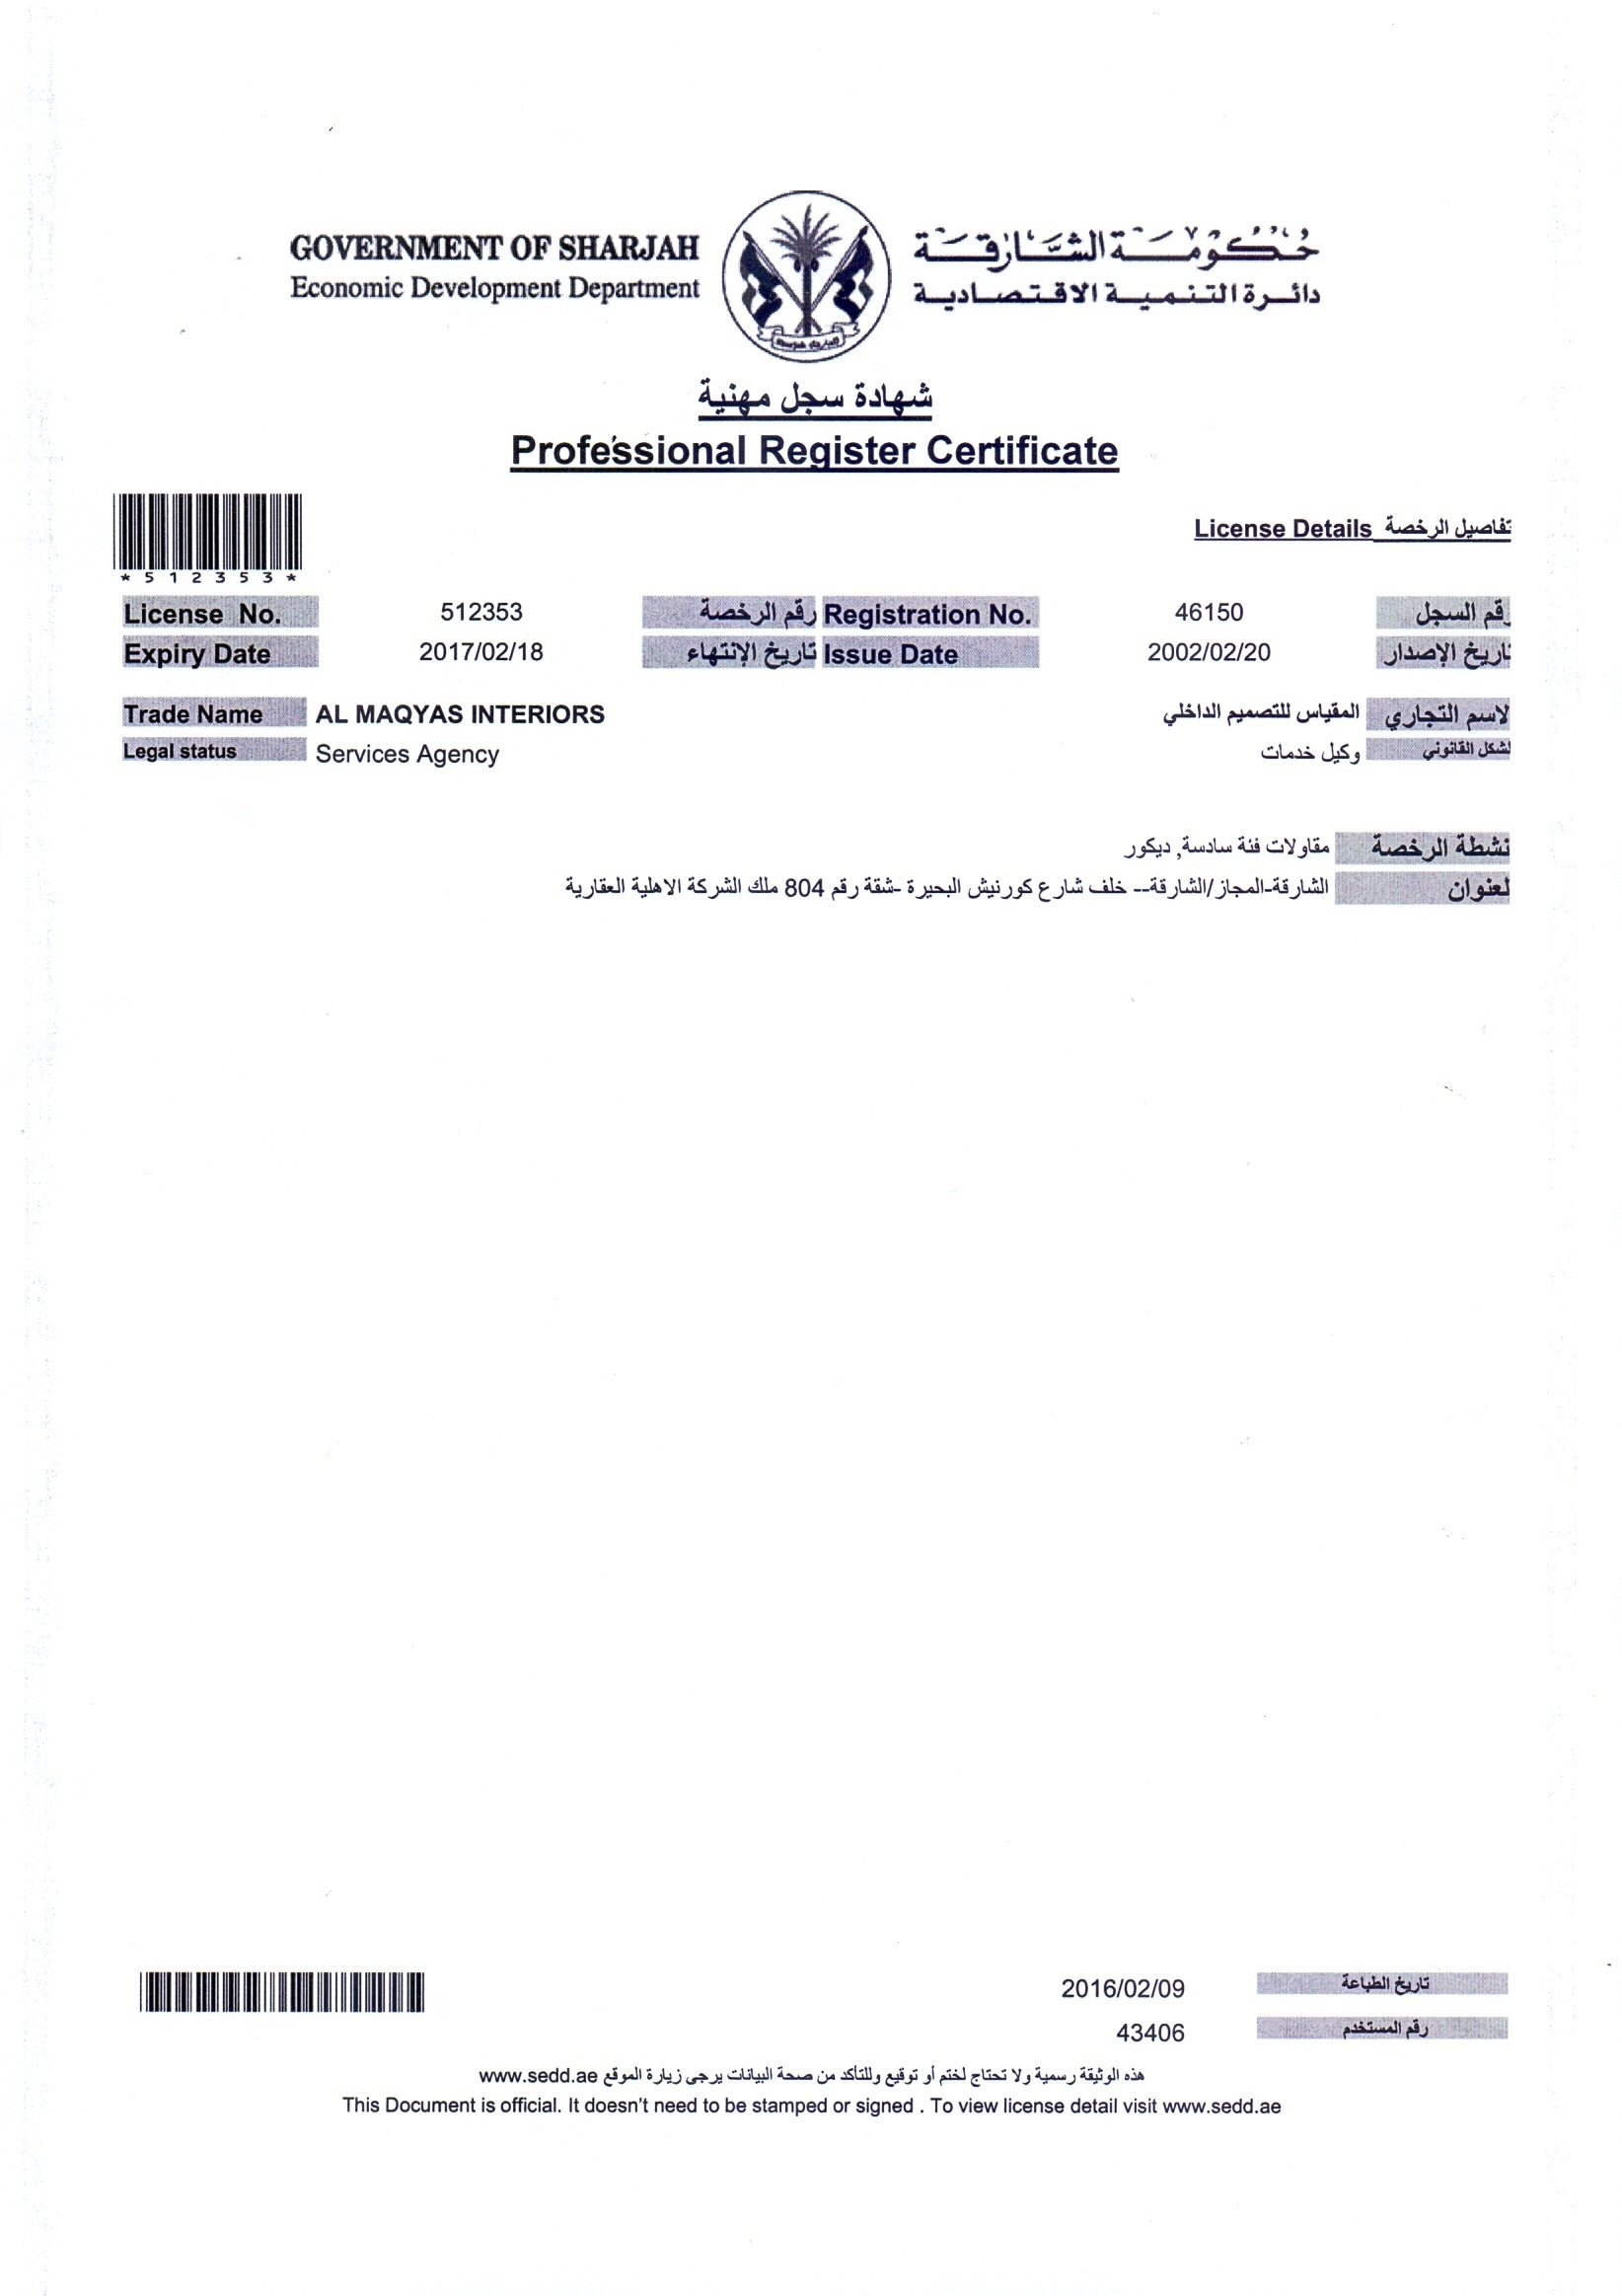 Professional Register Certificate